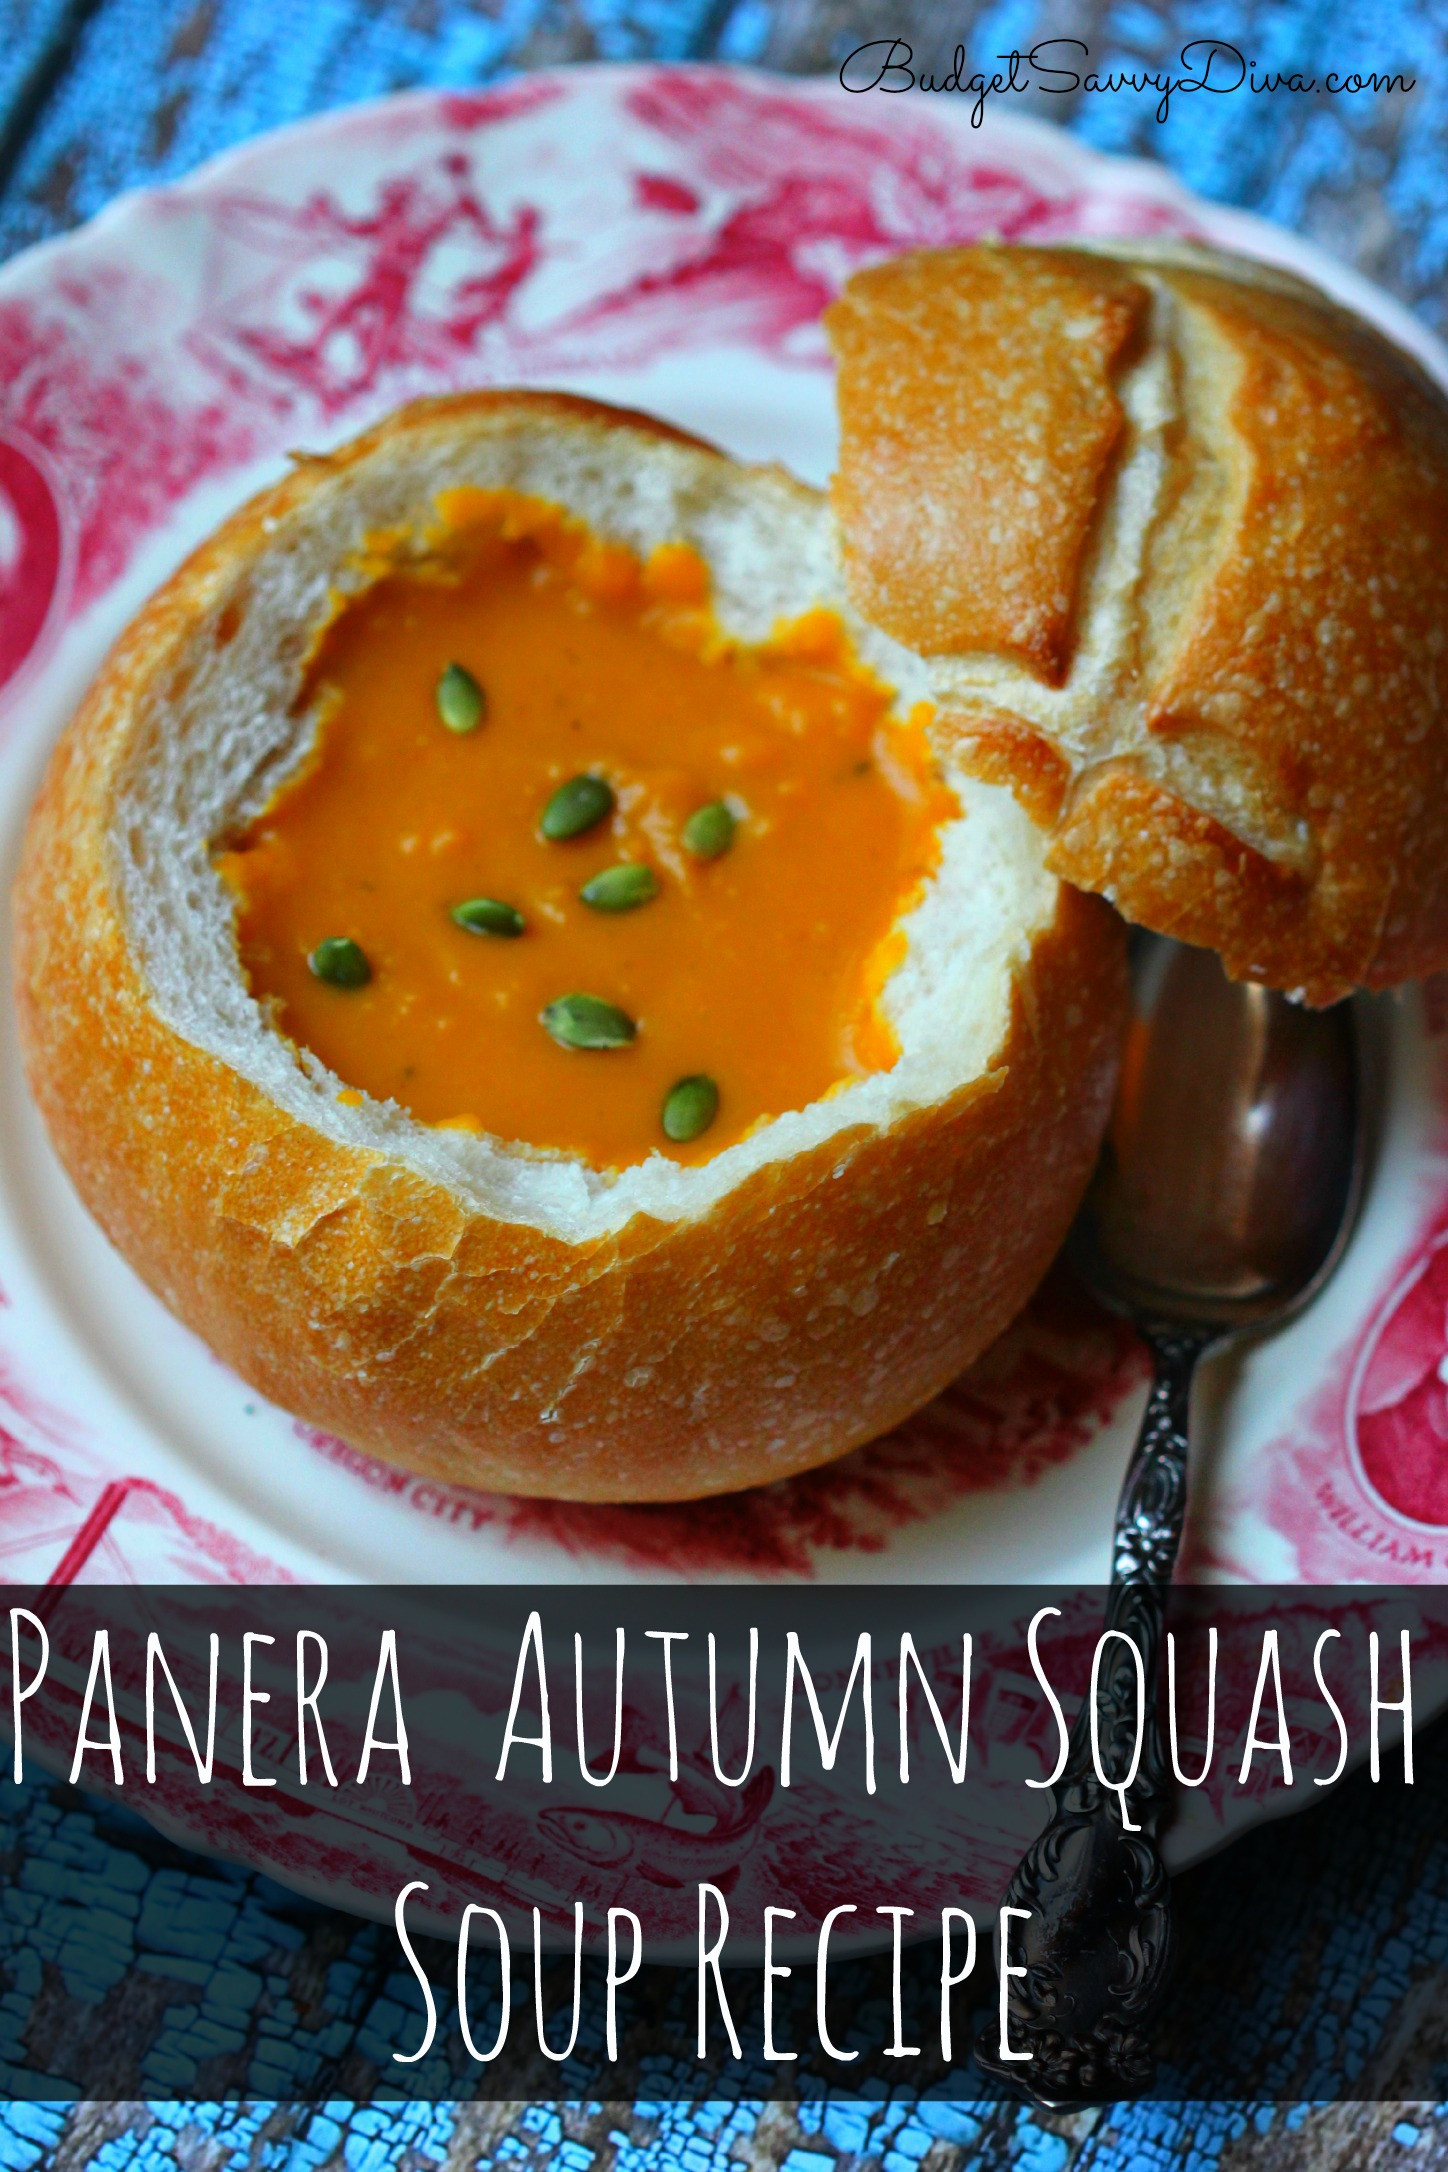 Panera Bread Autumn Squash Soup Recipes
 Panera Autumn Squash Soup Recipe Bud Savvy Diva